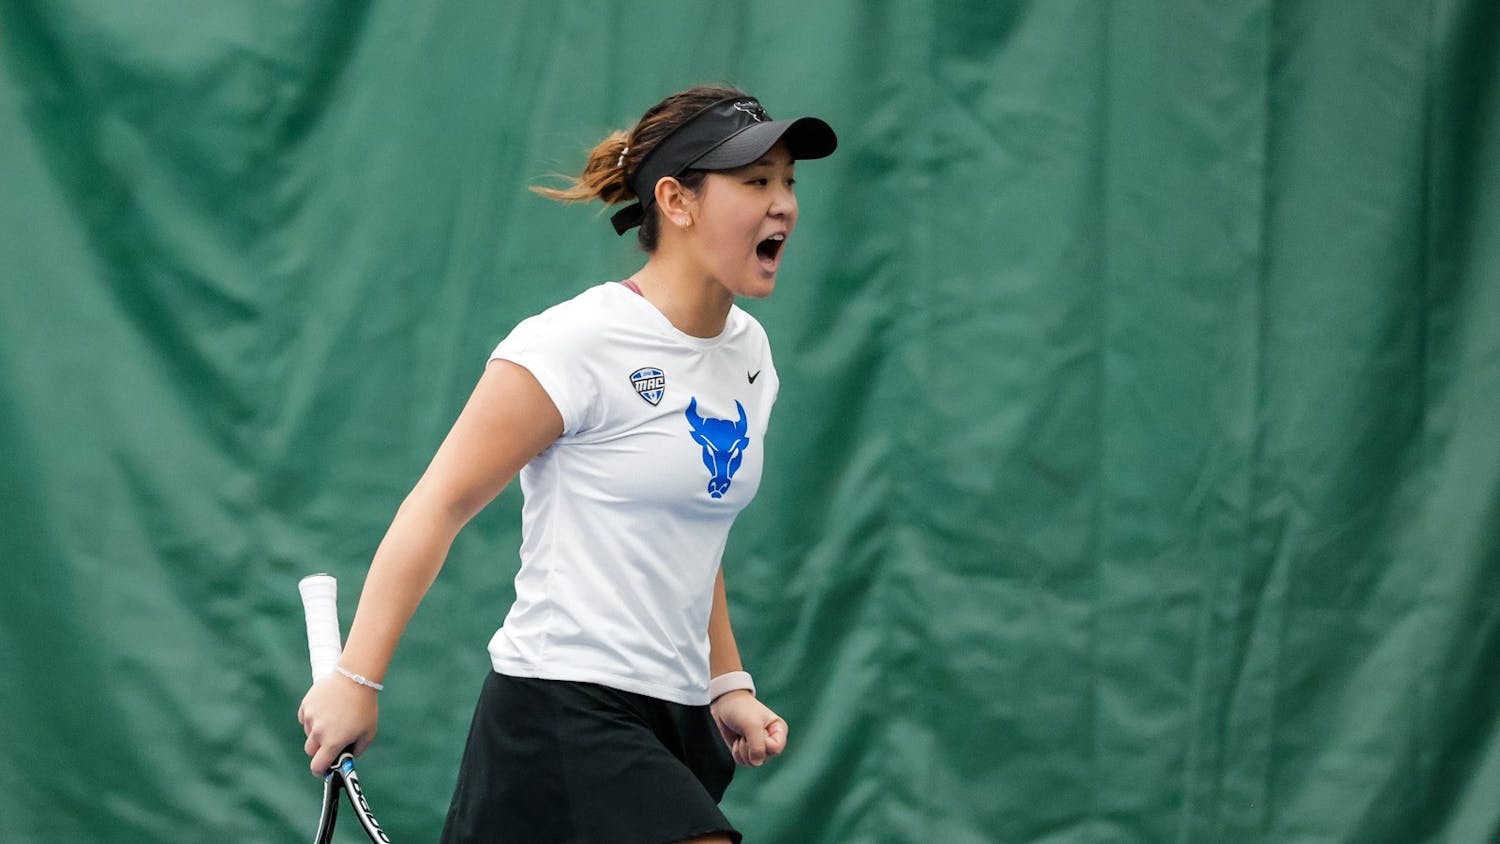 Tennis player Deanne Choo hails from Singapore.